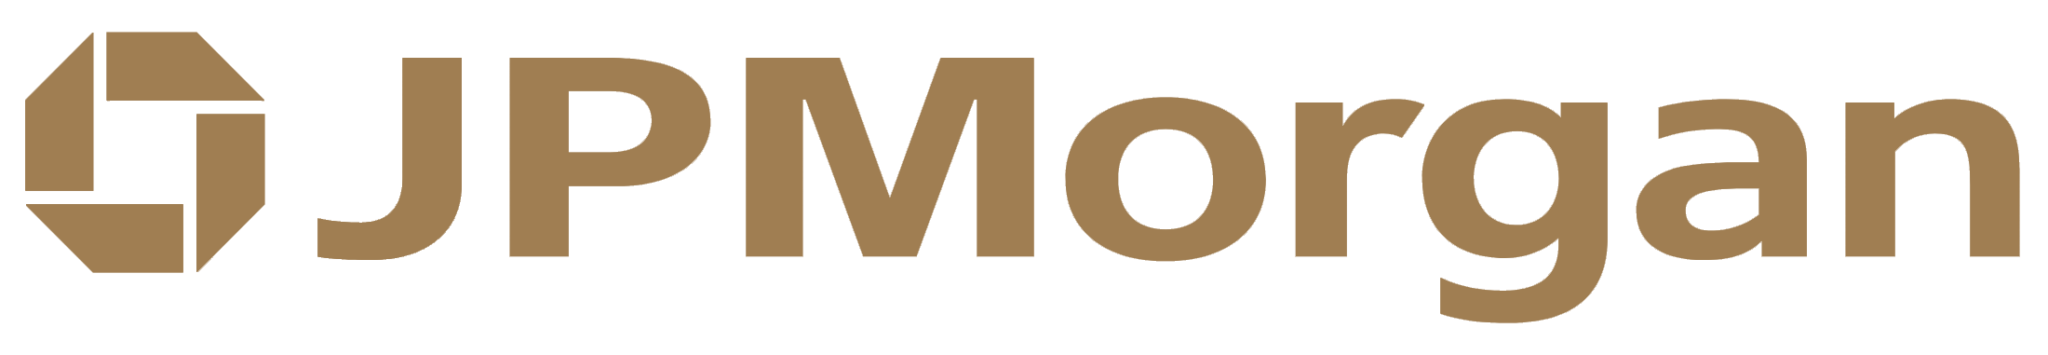 JPMorgan-Logo-2048x355-1.png